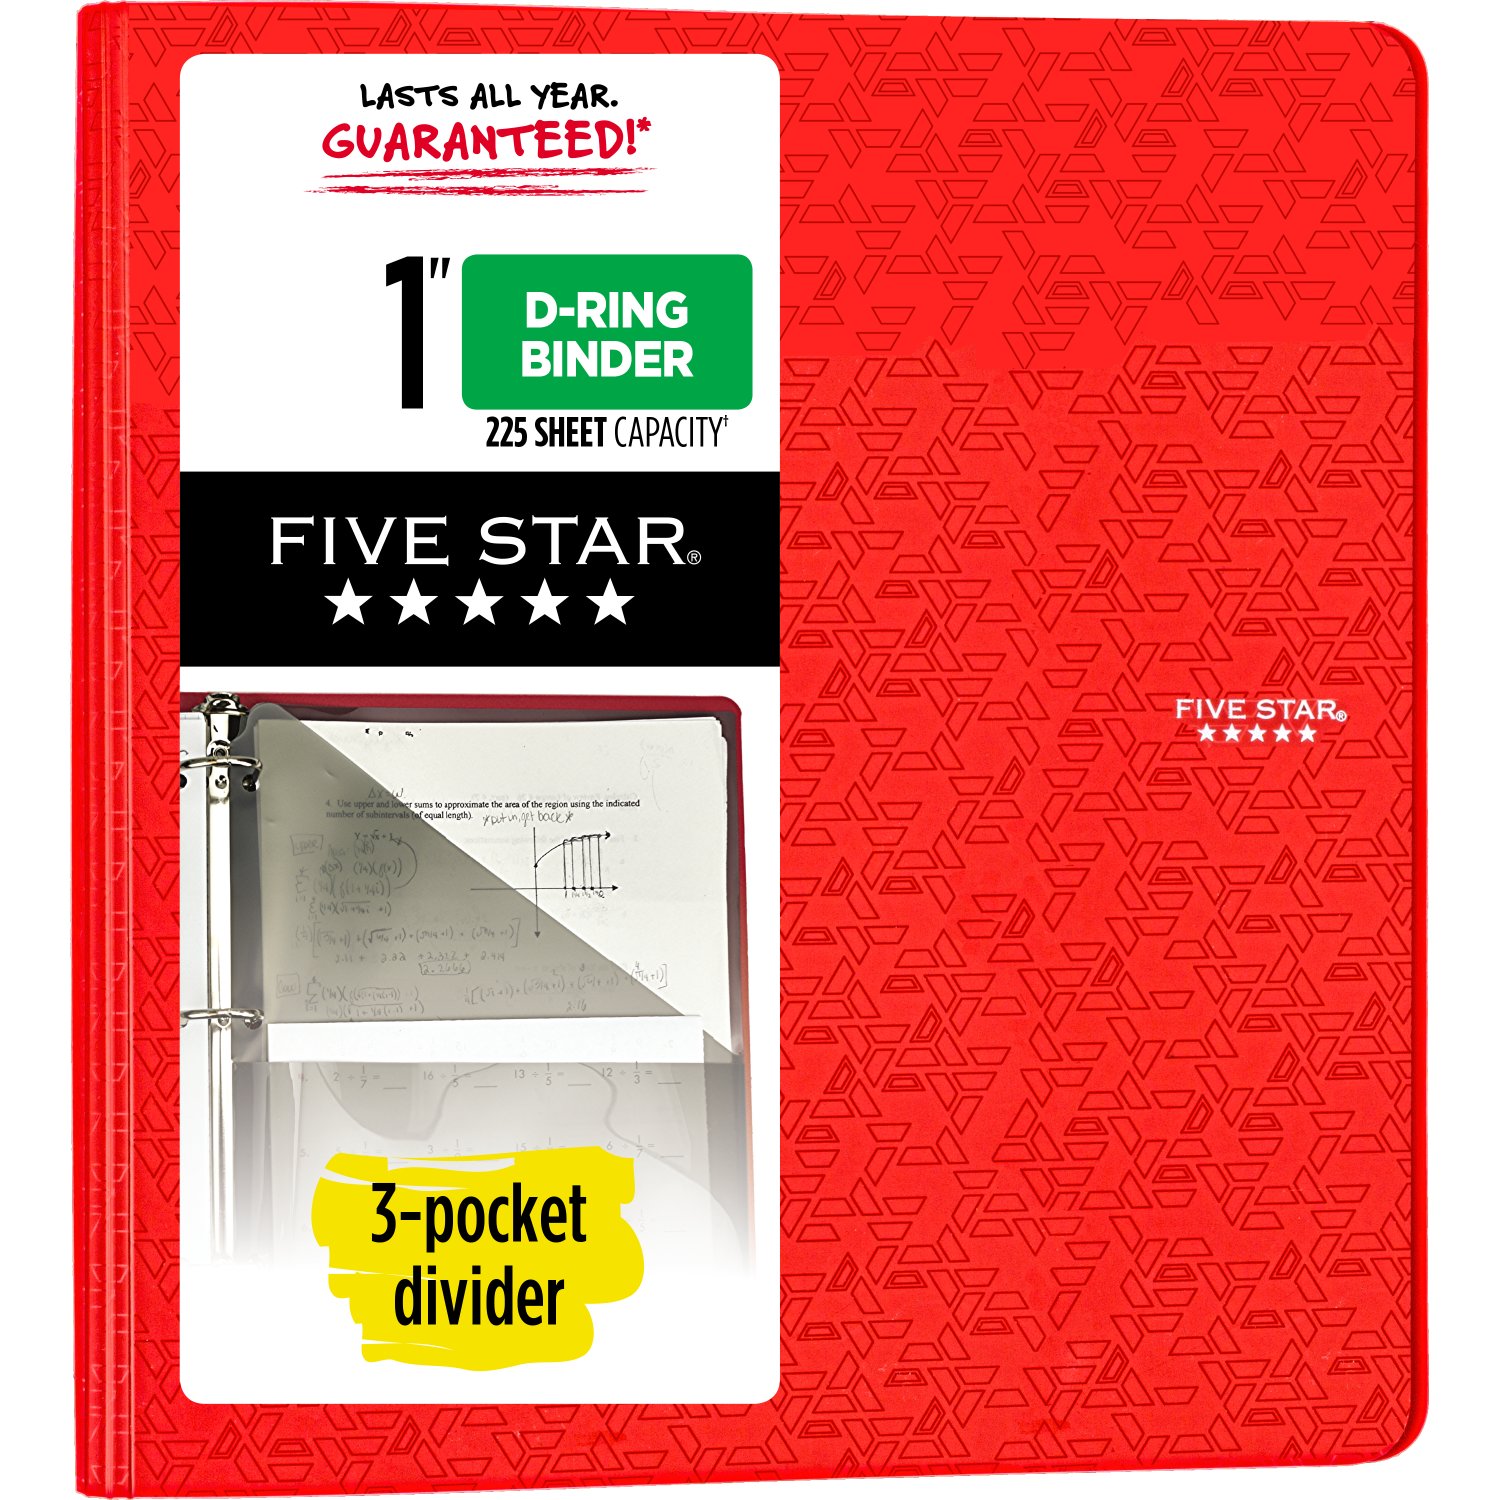 Five Star 1 Plastic Binder Assorted Colors 11 34 x 11